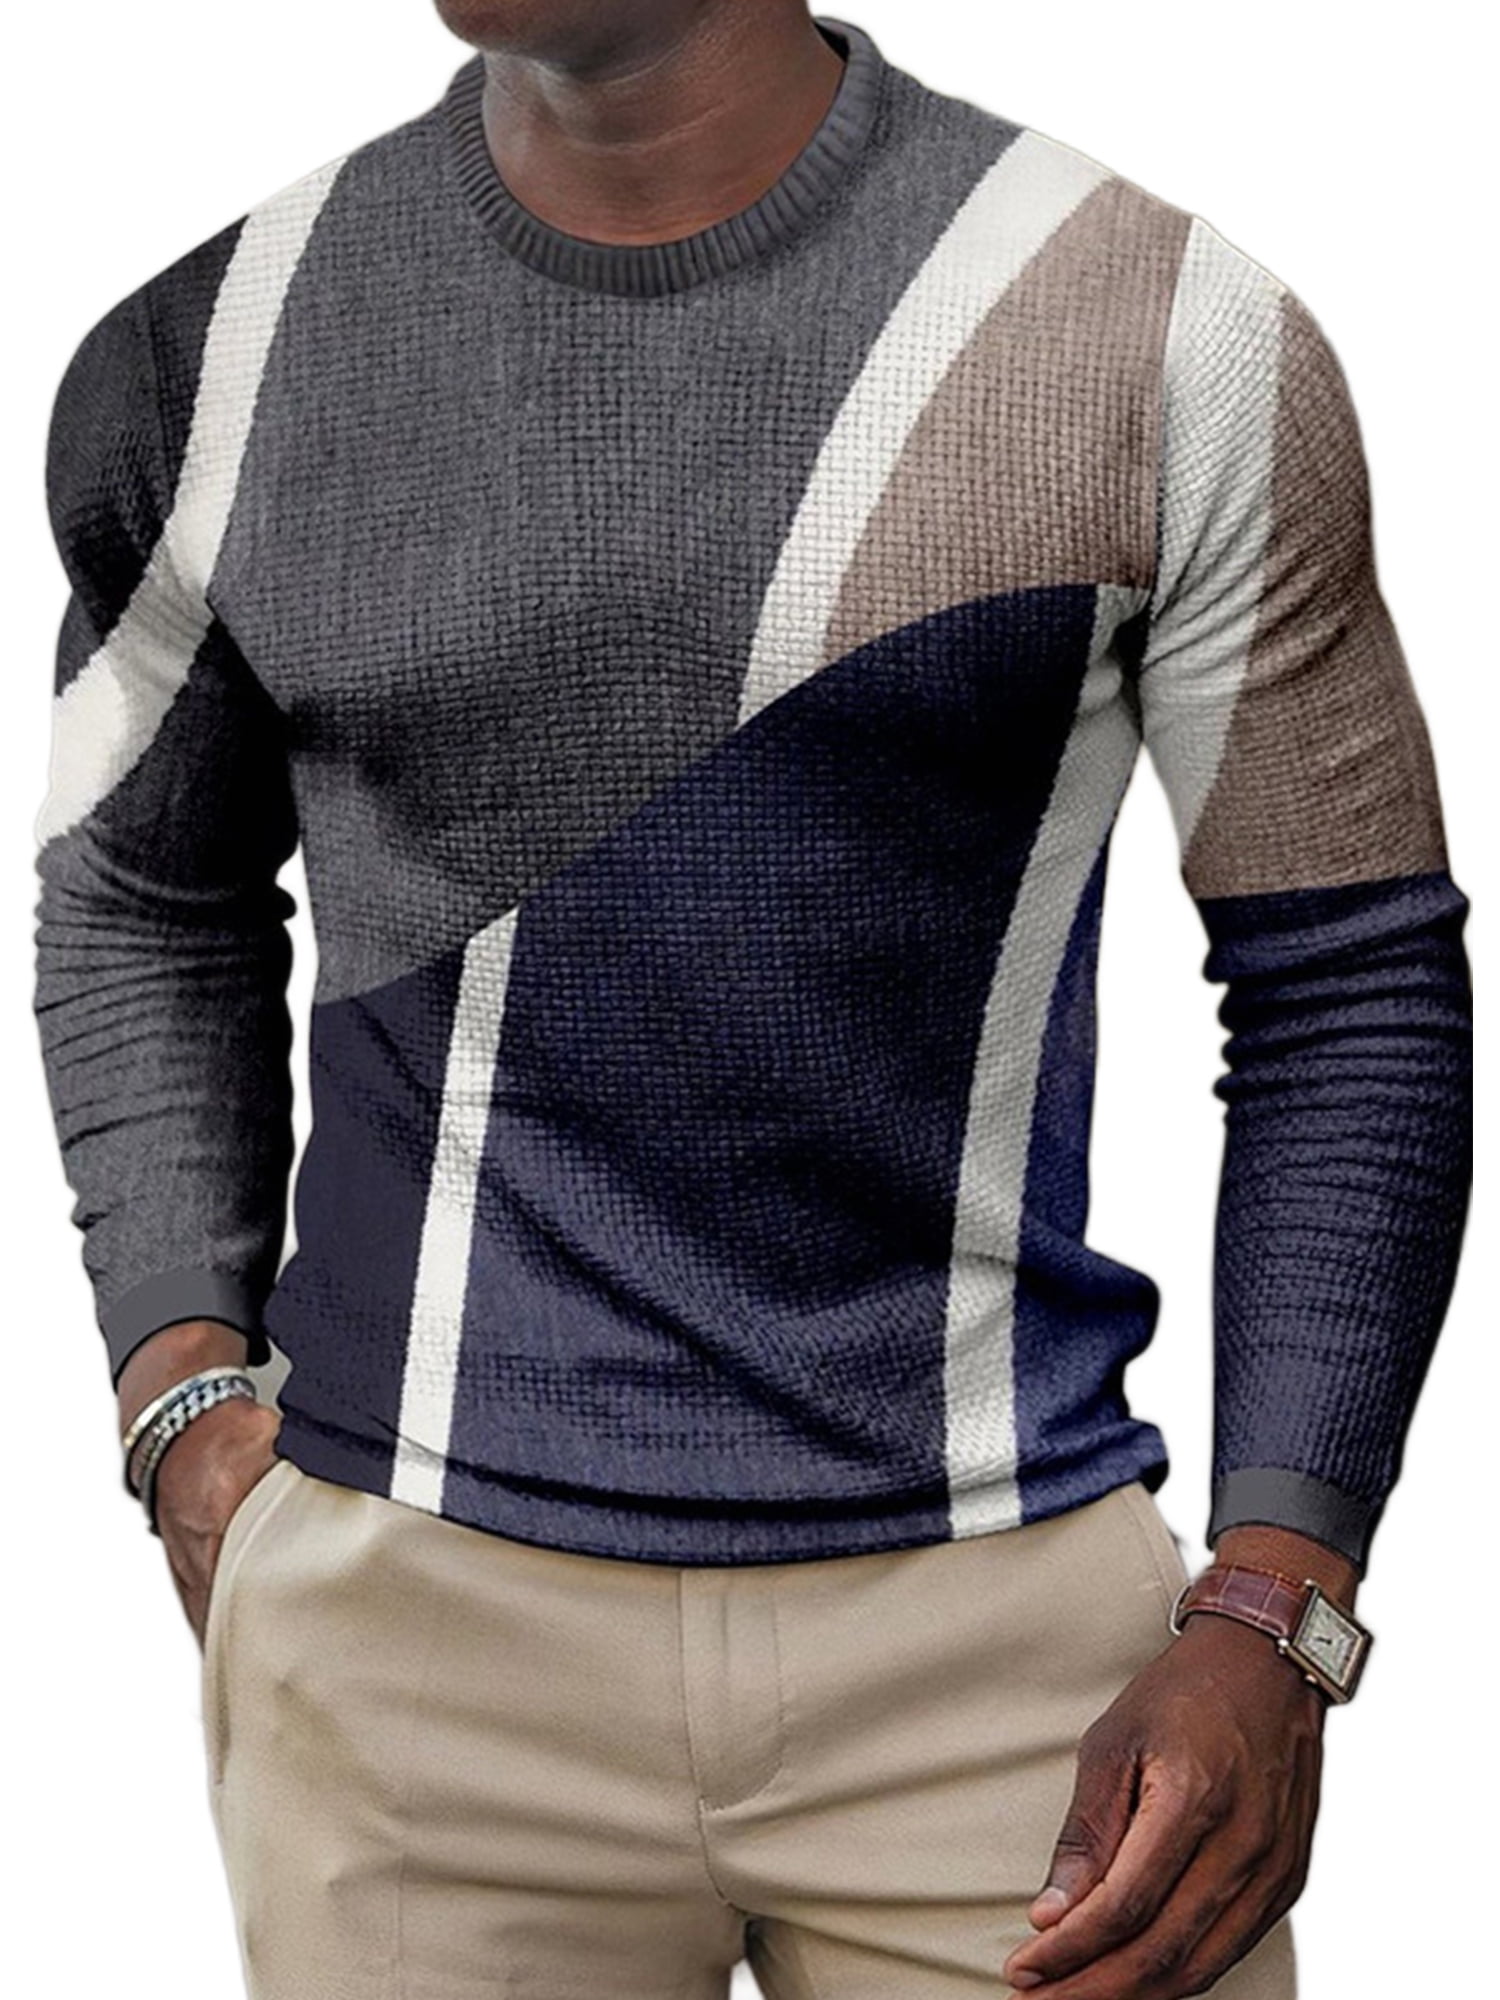 Avamo Men Fashion Crew Neck Geometric Printed Tee Shirt Basic Regular Fit  Tops Long Sleeve Sport T Shirts Style N 2XL 